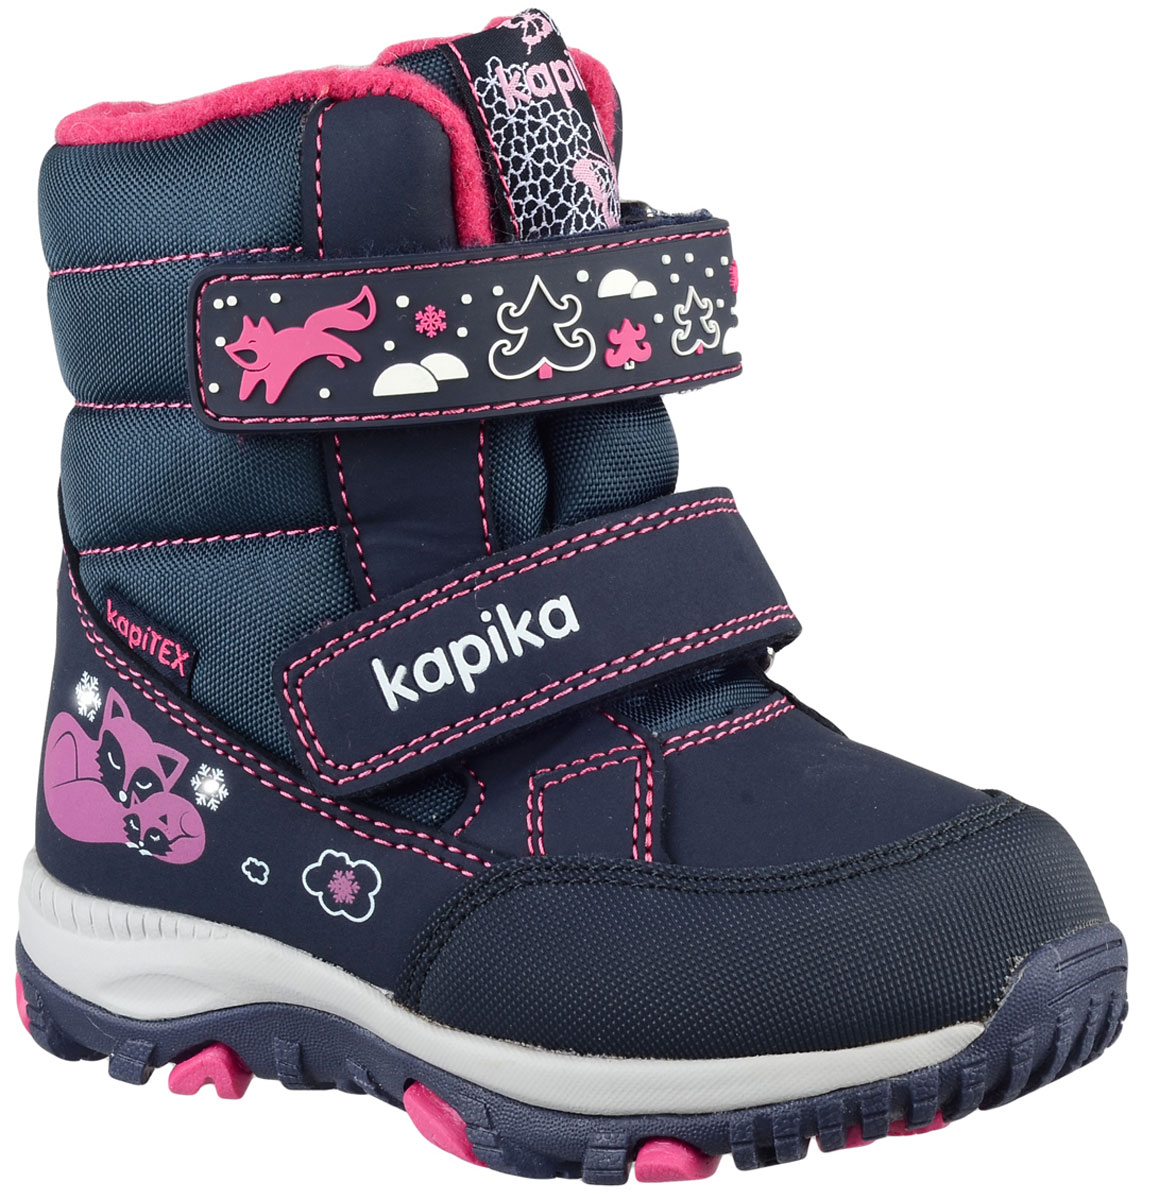 Ботинки для девочки Kapika, цвет: темно-синий, фуксия. 41220-1. Размер 23